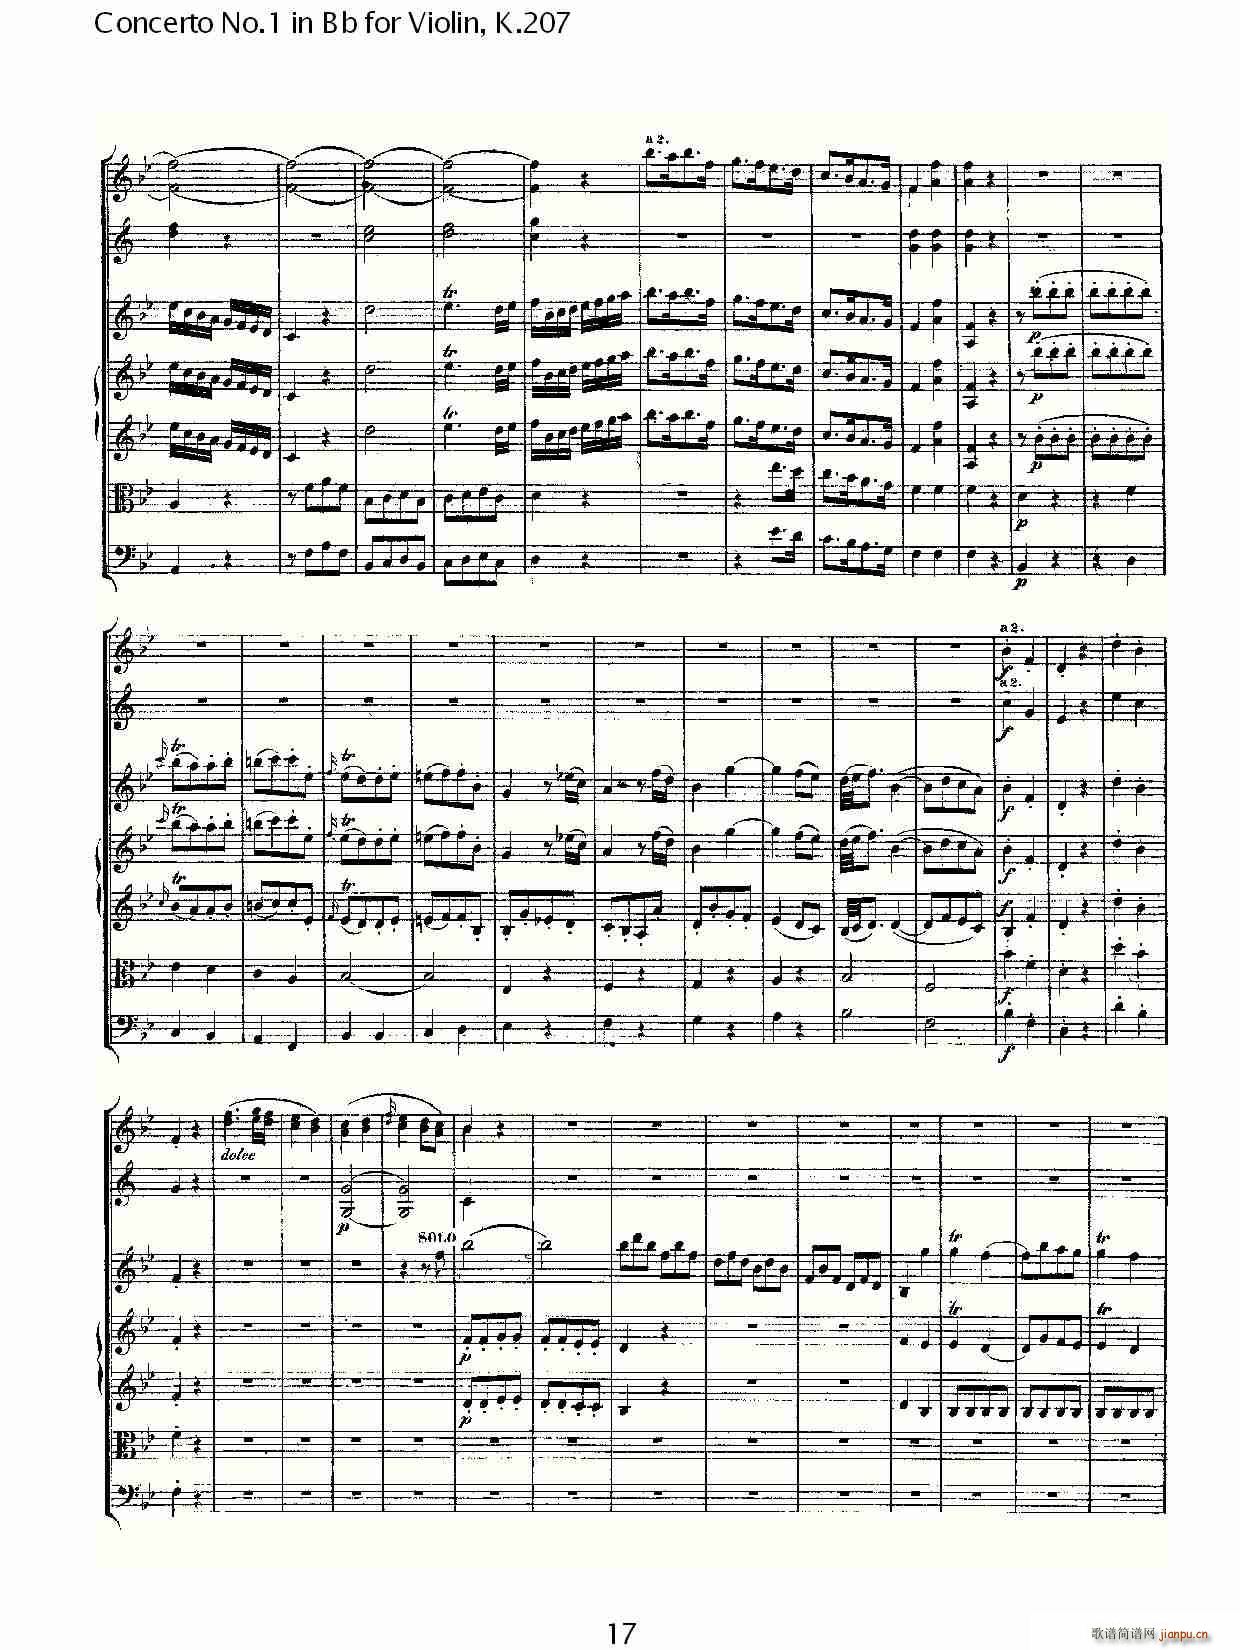 Concerto No.1 in Bb for Violin, K.207(С)17